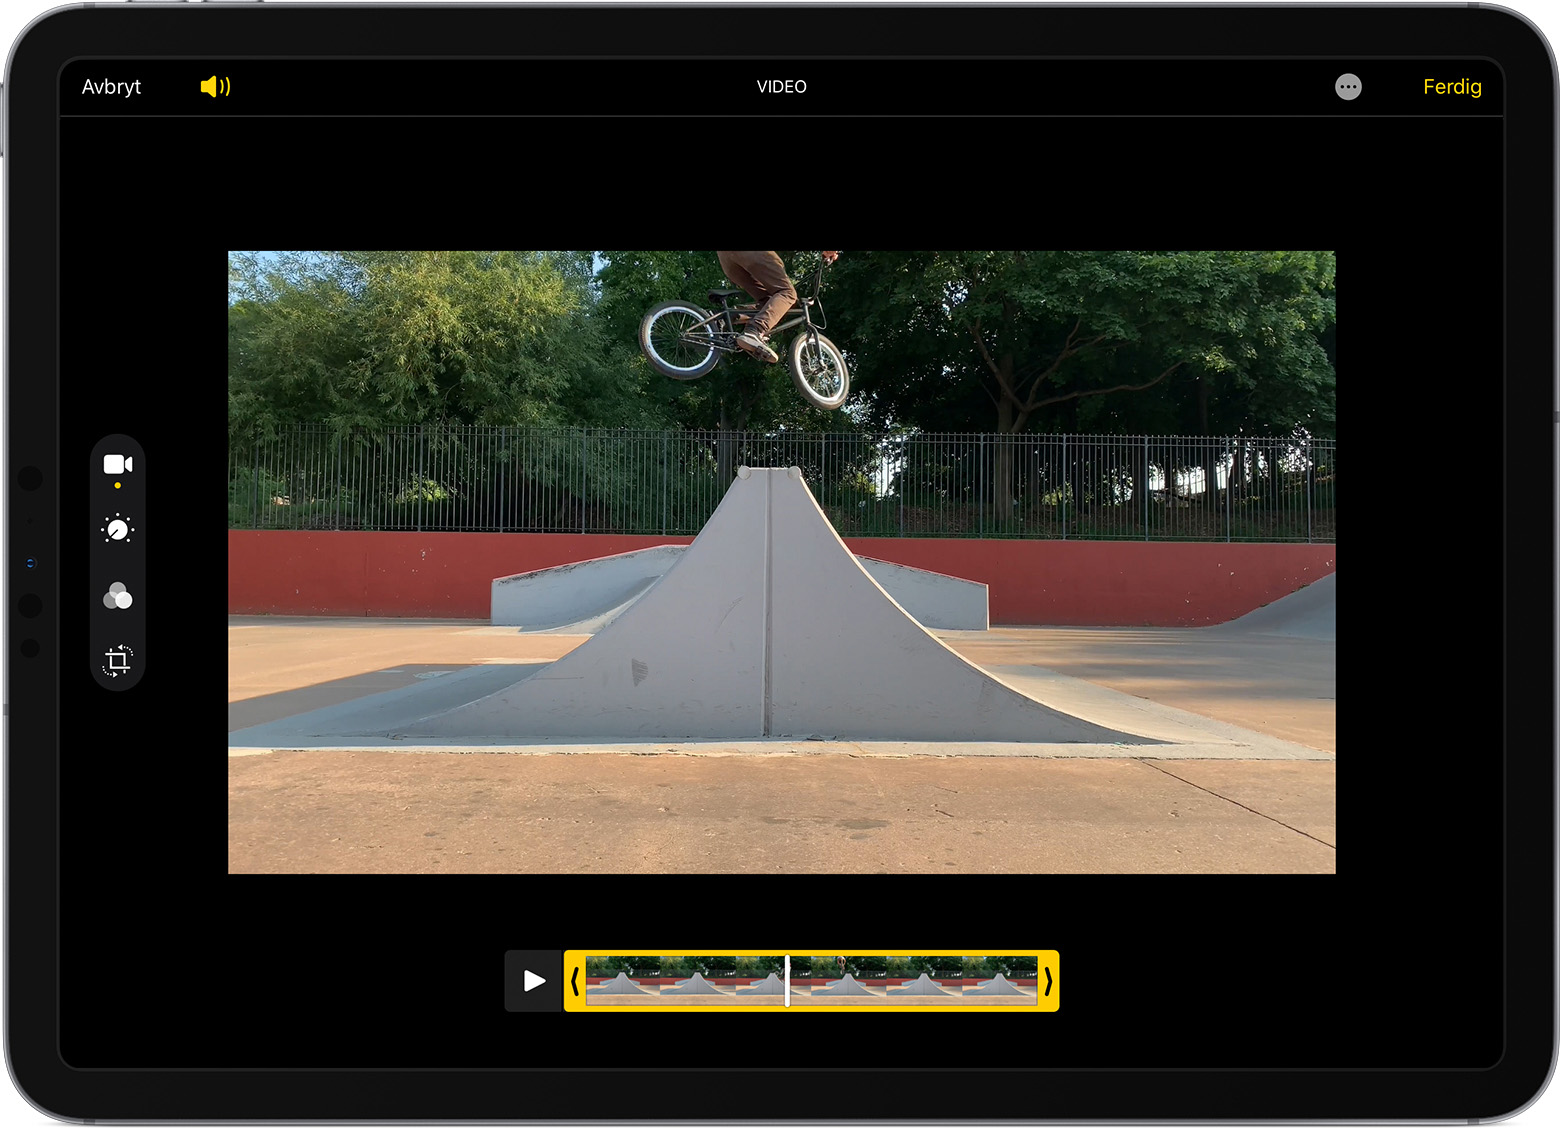 iPad som viser en video i redigeringsmodus